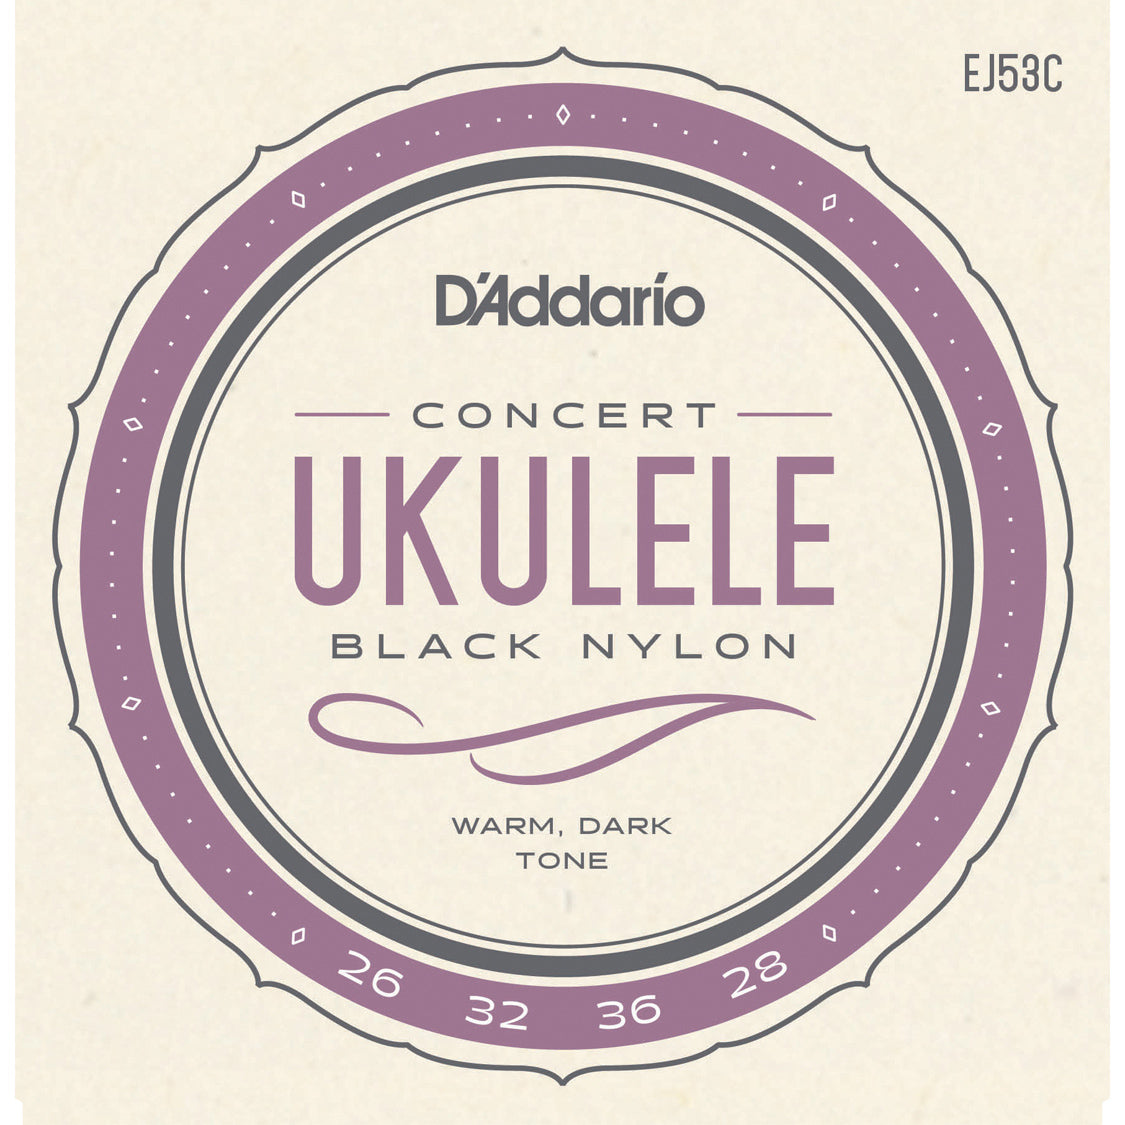 D'Addario EJ53C Ukulele Concert Black Nylon